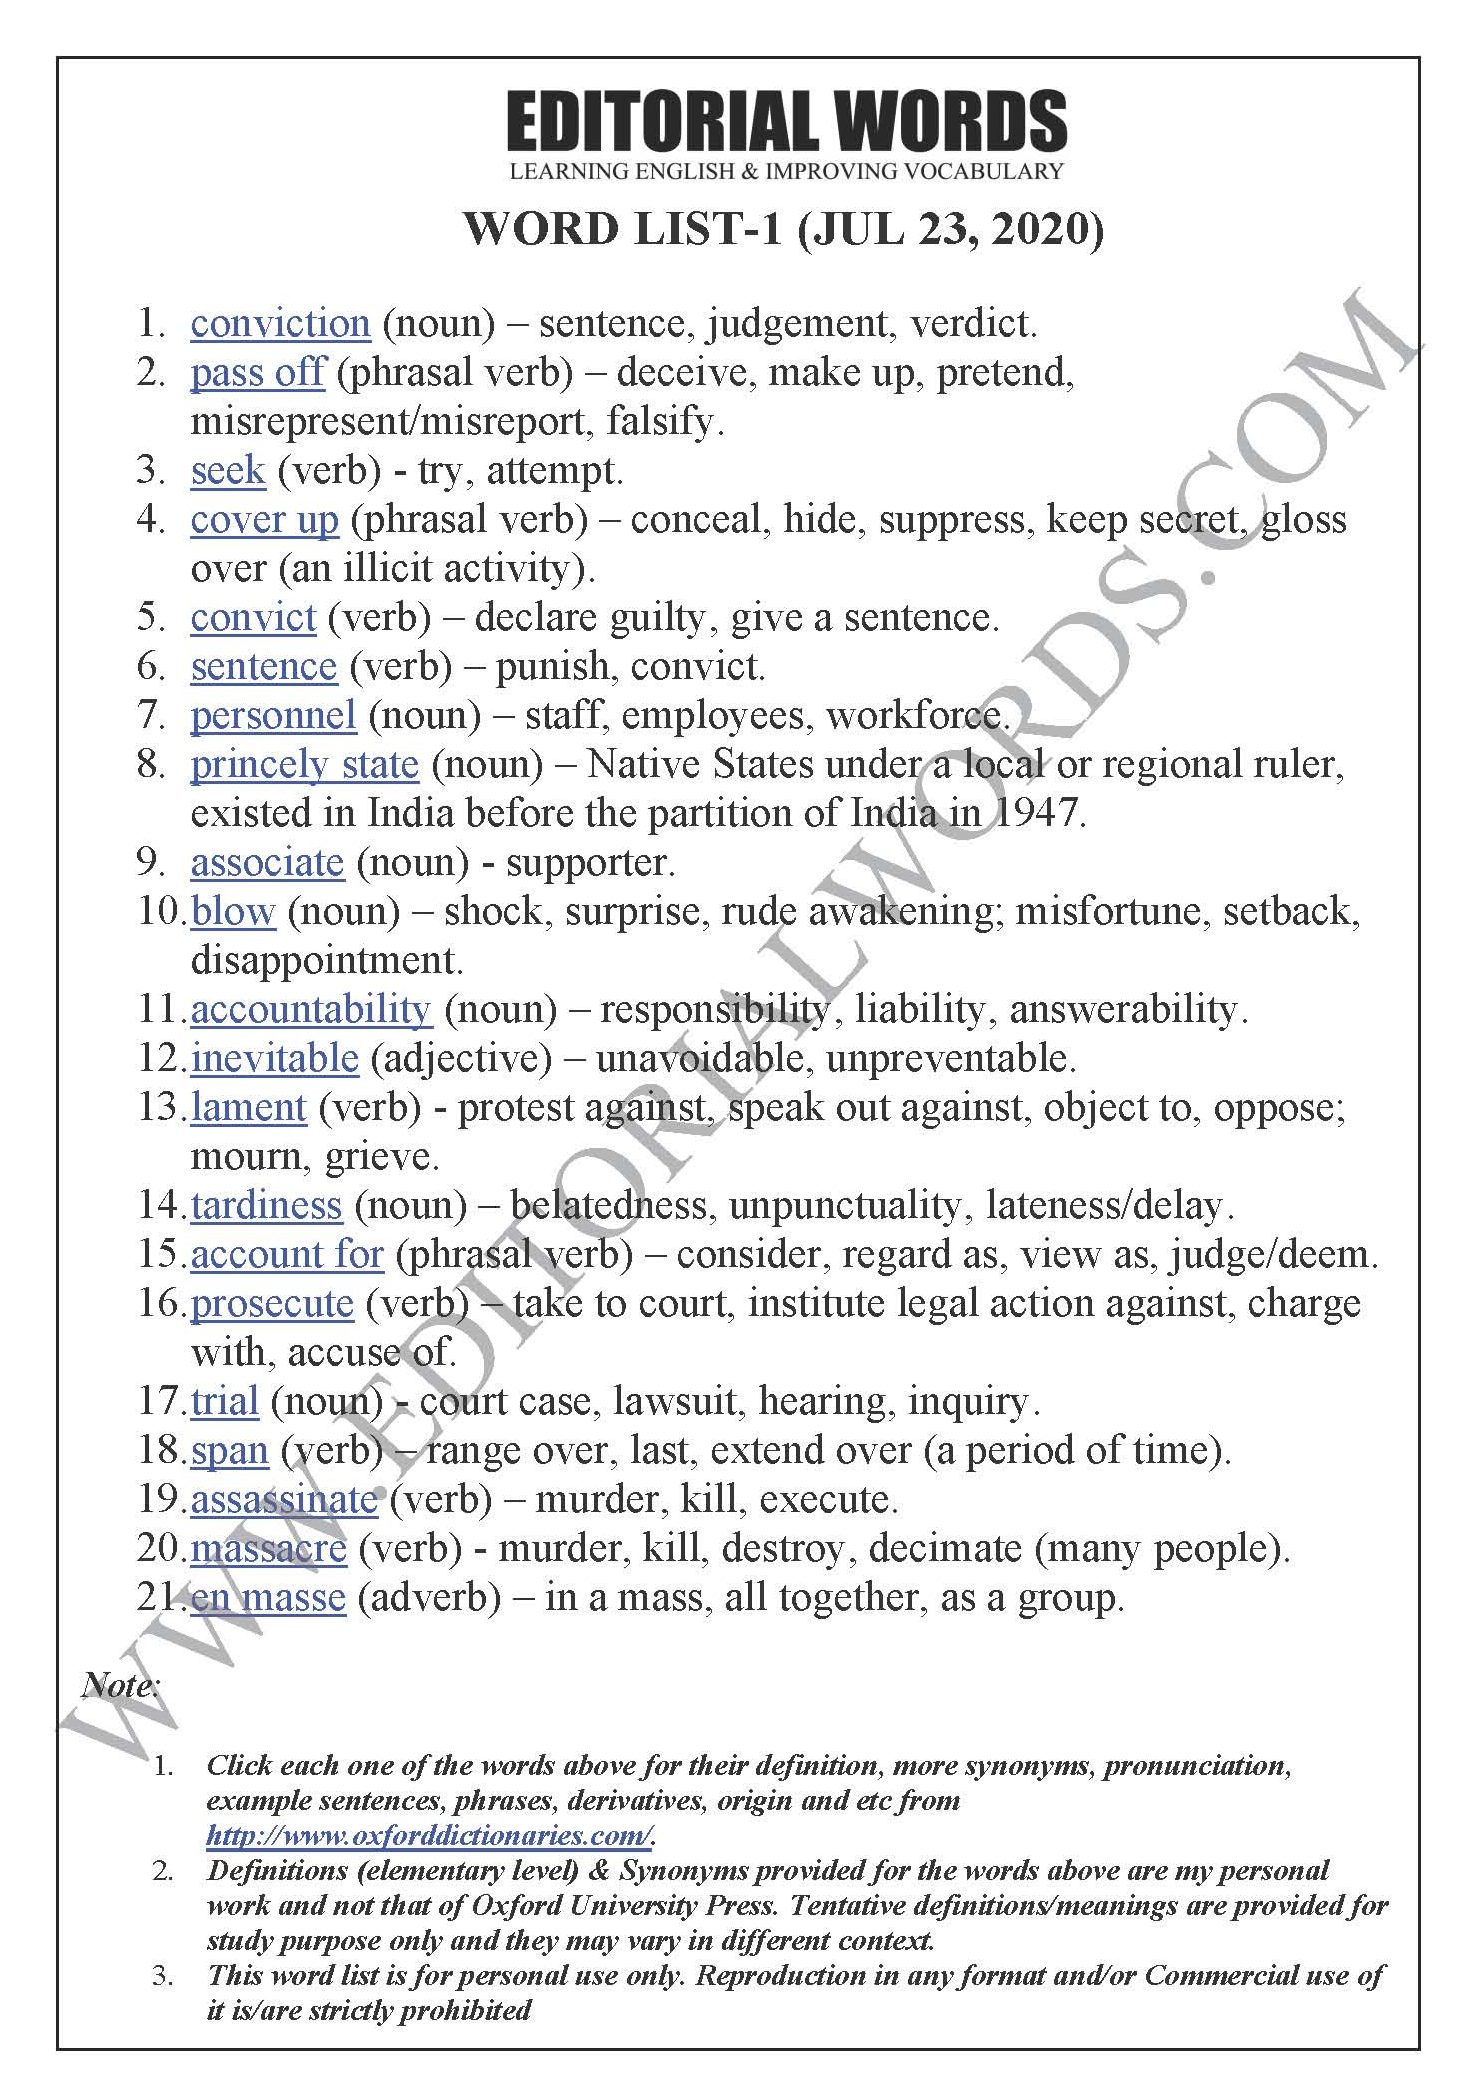 pretend - 13 adjectives which are synonym of pretend (sentence